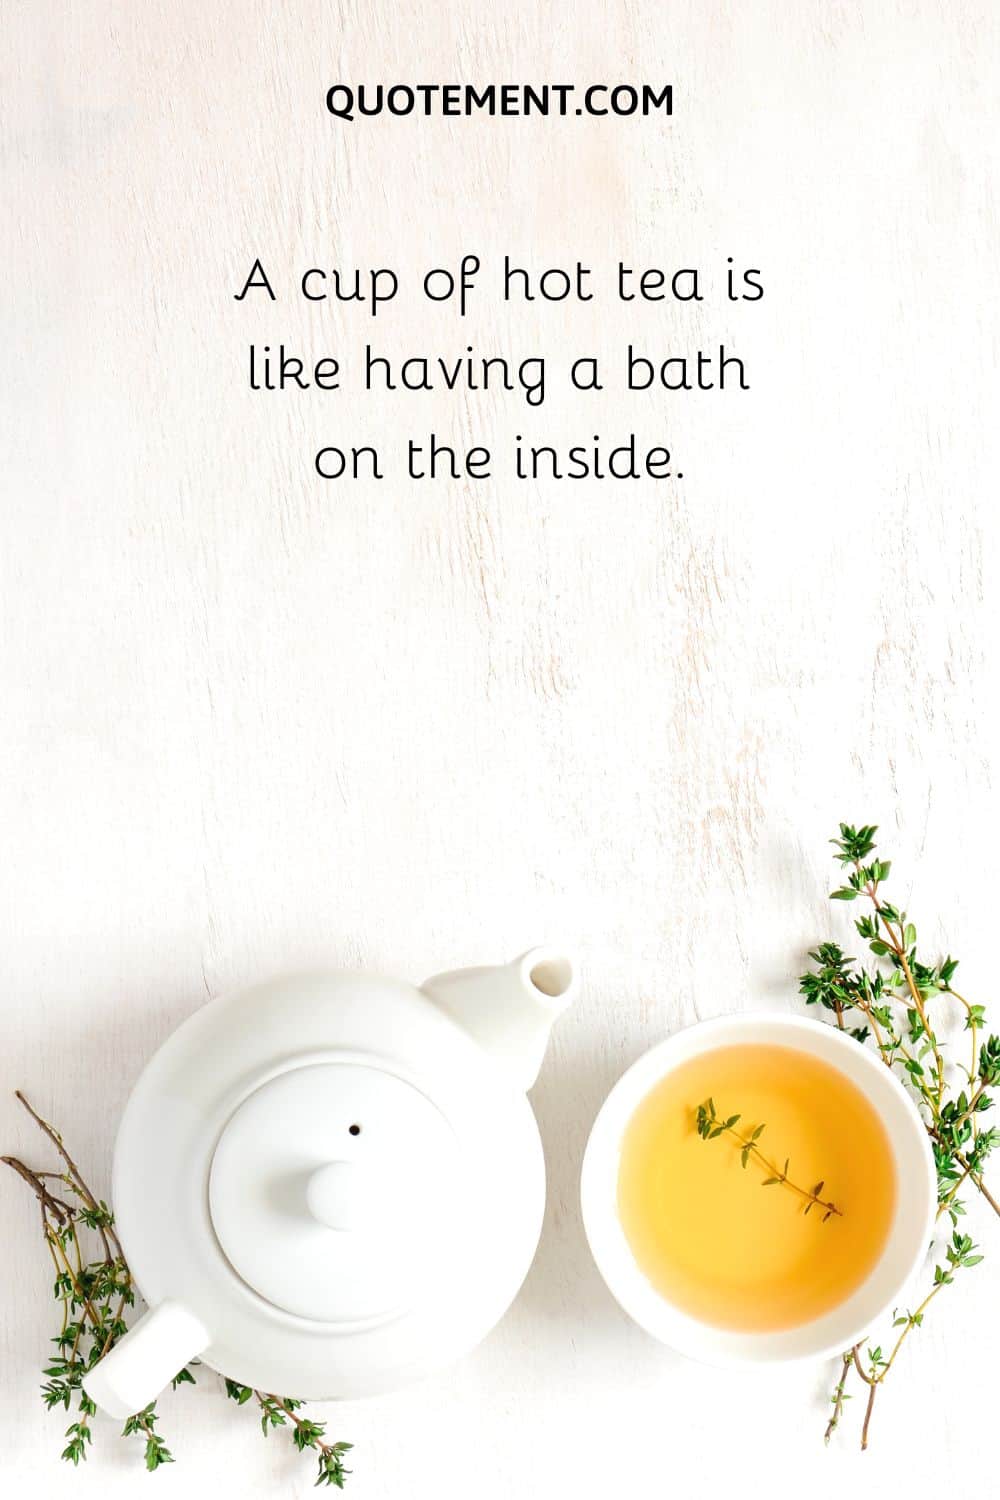 A cup of hot tea is like having a bath on the inside.